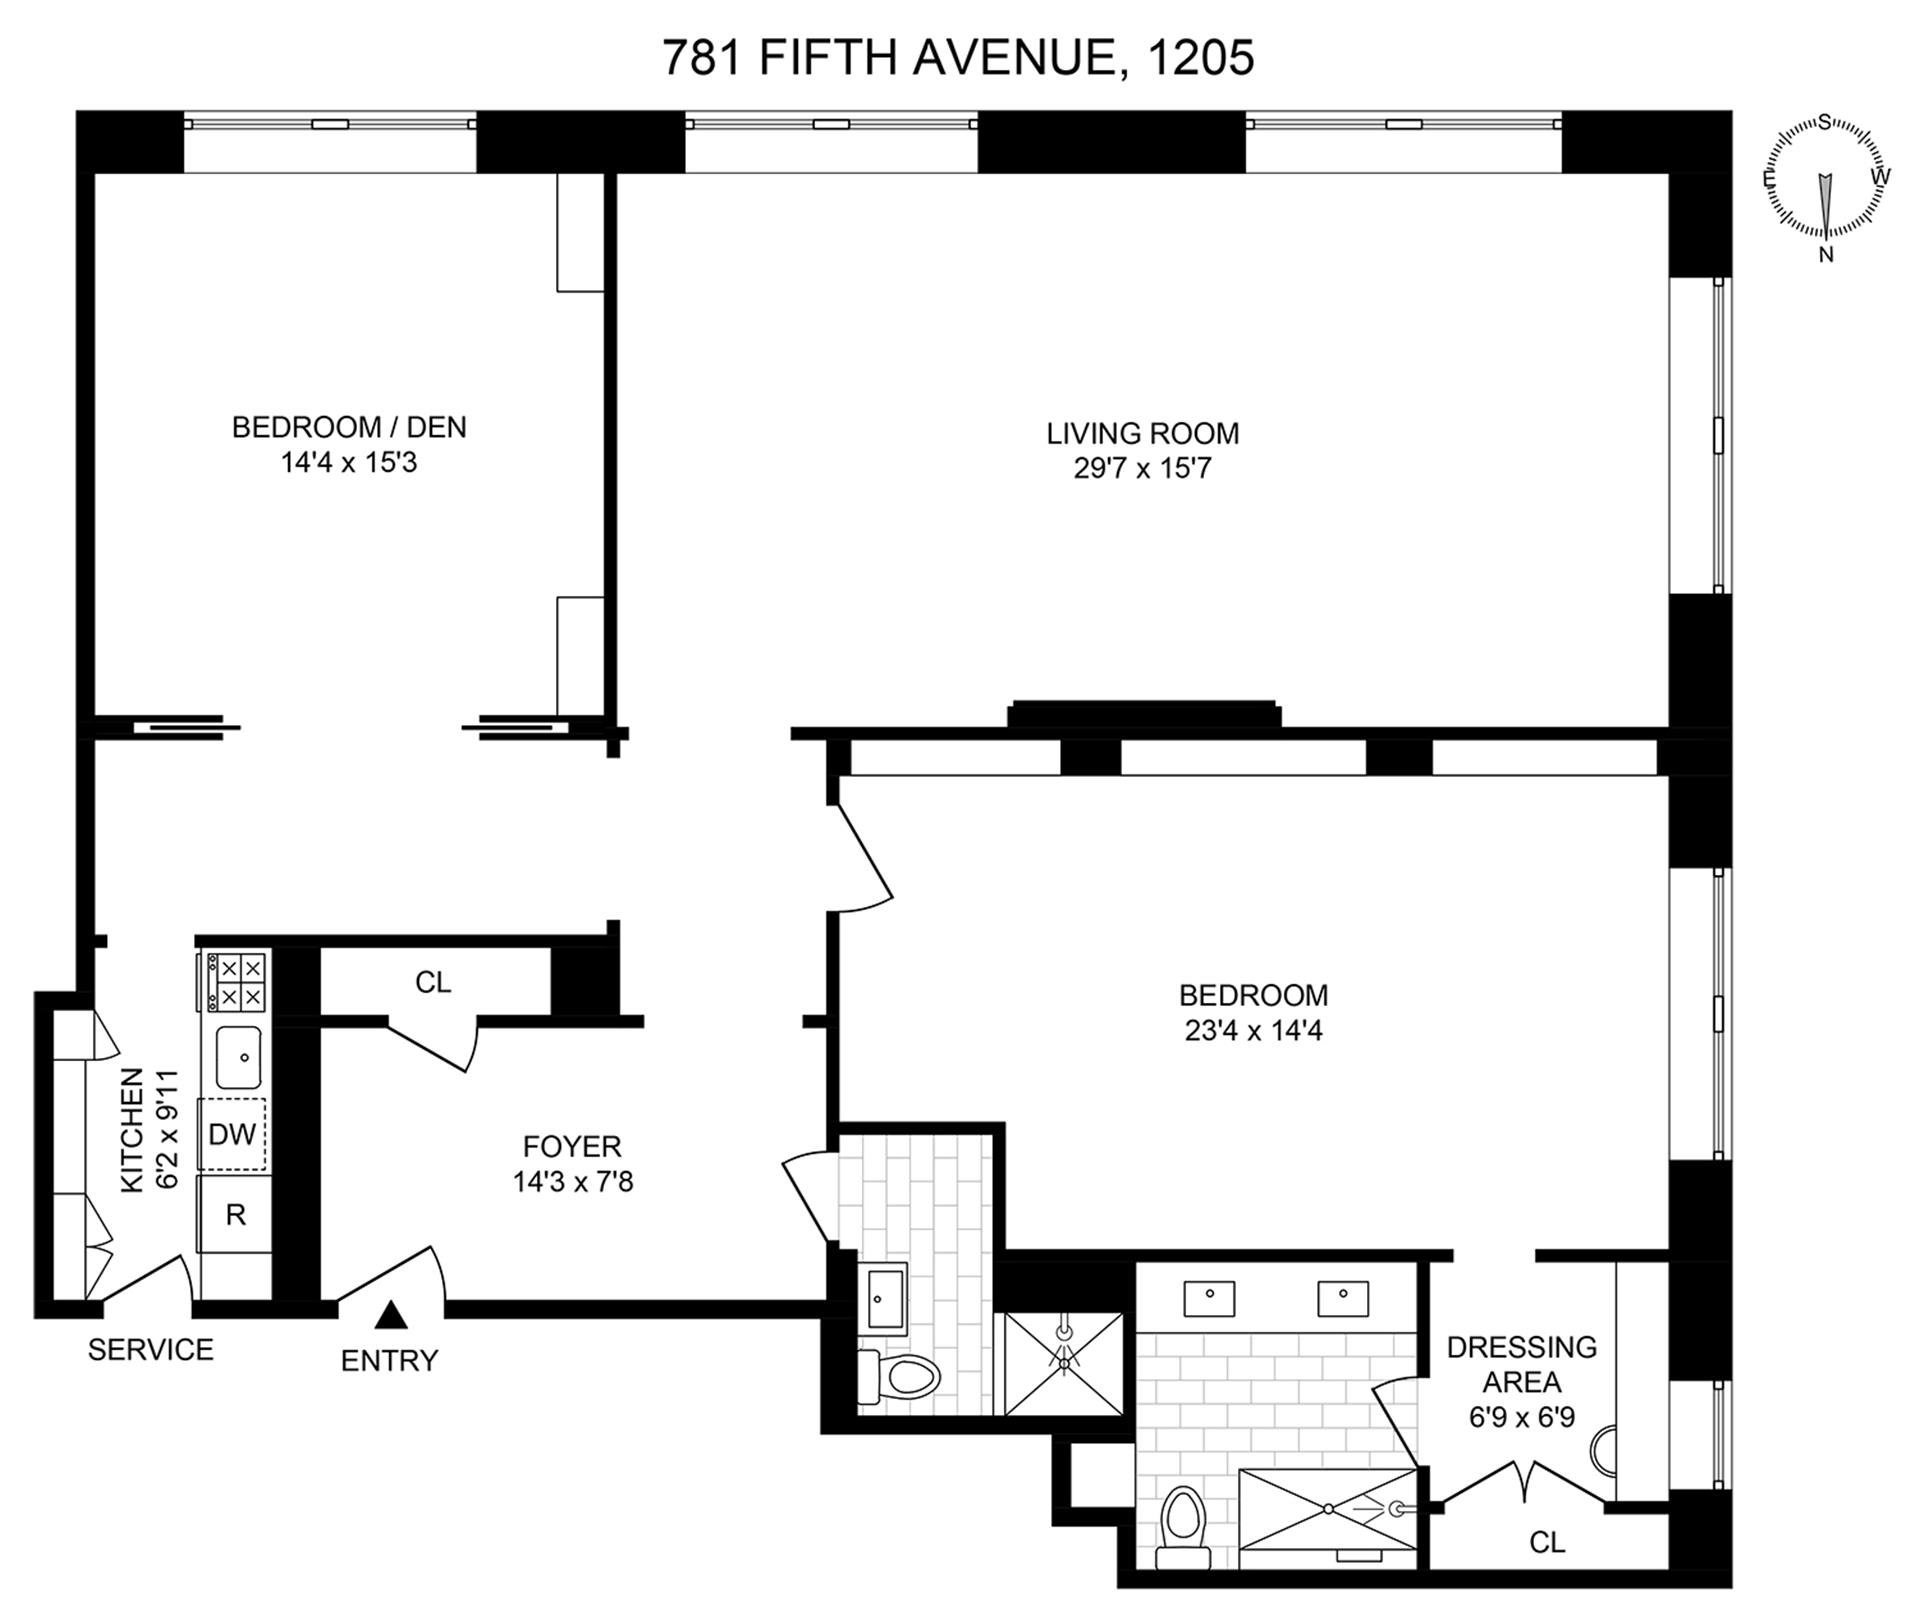 Floorplan for 781 5th Avenue, 1205